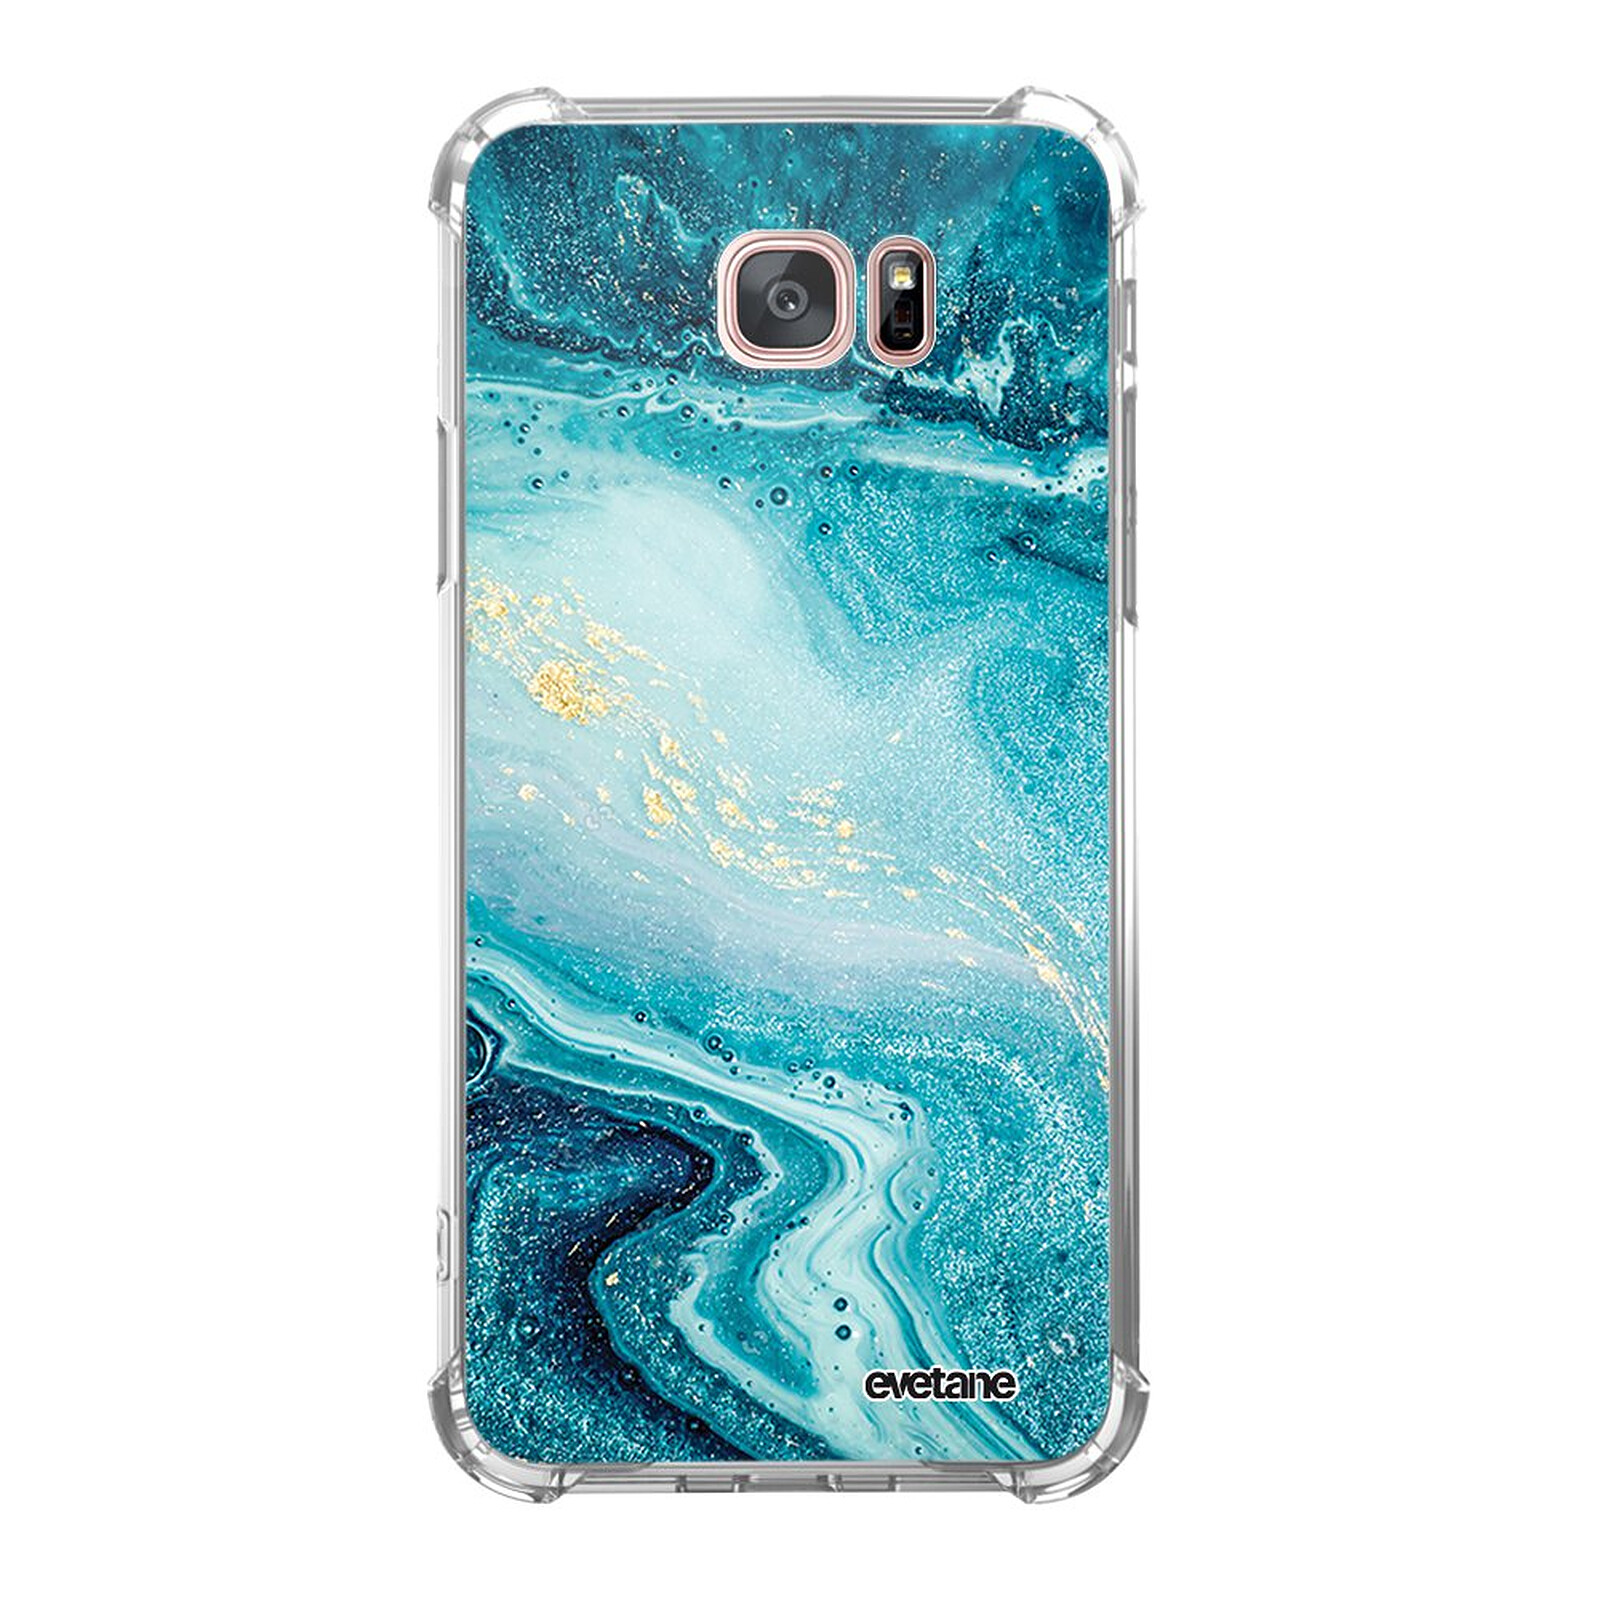 Jinghaush Compatible avec Samsung Galaxy S7 Edge Coque Marbre Motif Brillante Glitter Ultra Mince Souple TPU Silicone Fille Femme Housse Etui de Protection Anti Scratch Bumper Case,Vert 